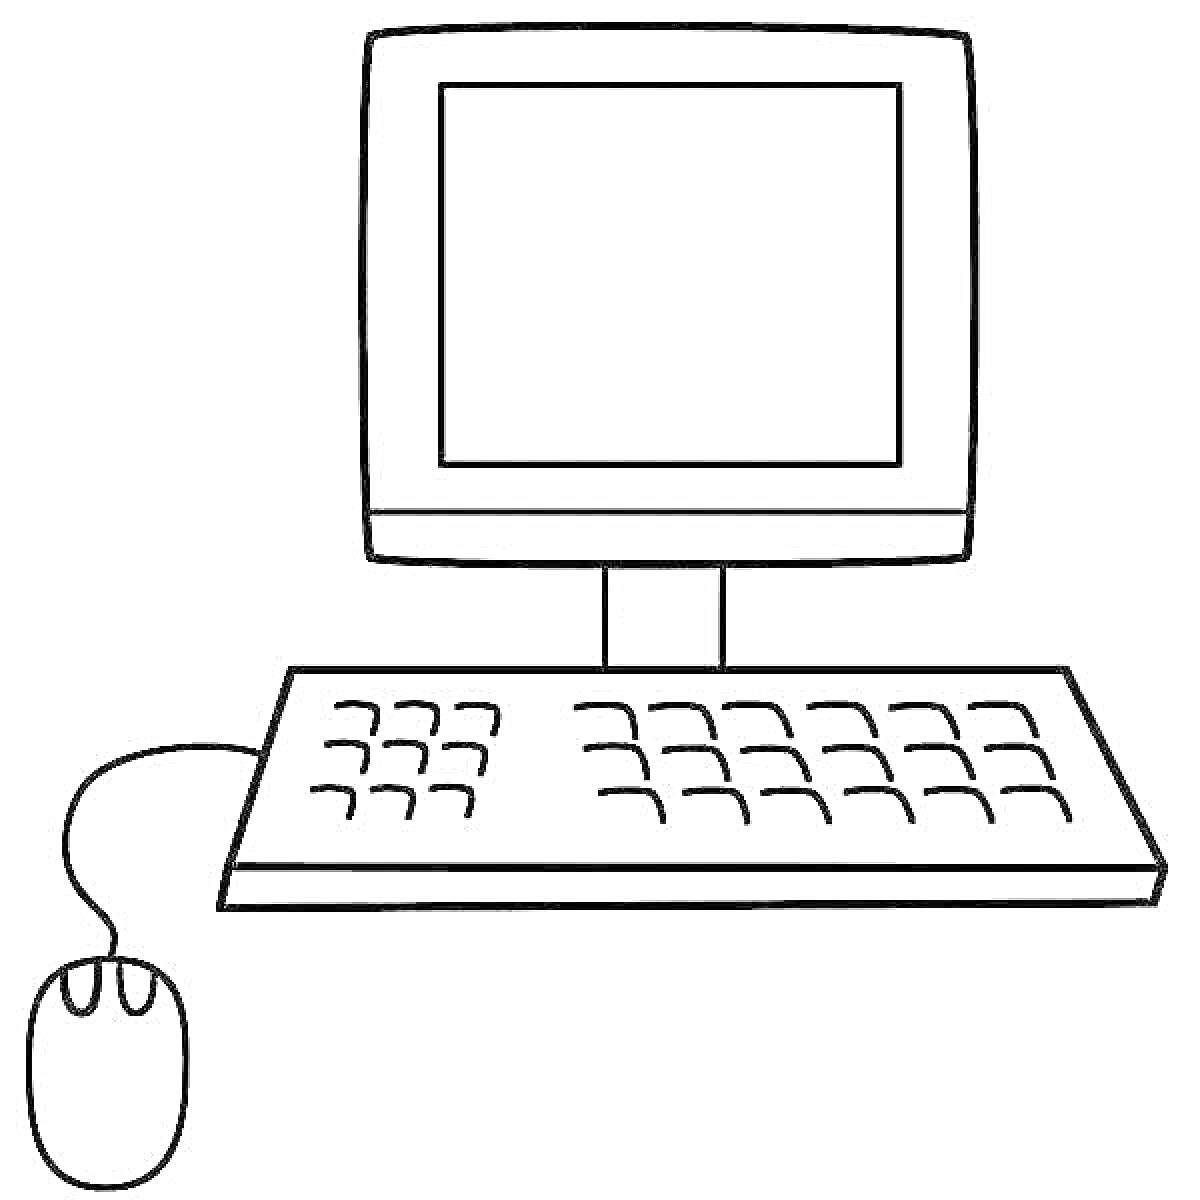 На раскраске изображено: Компьютер, Монитор, Клавиатура, Мышь, Техника, Электроника